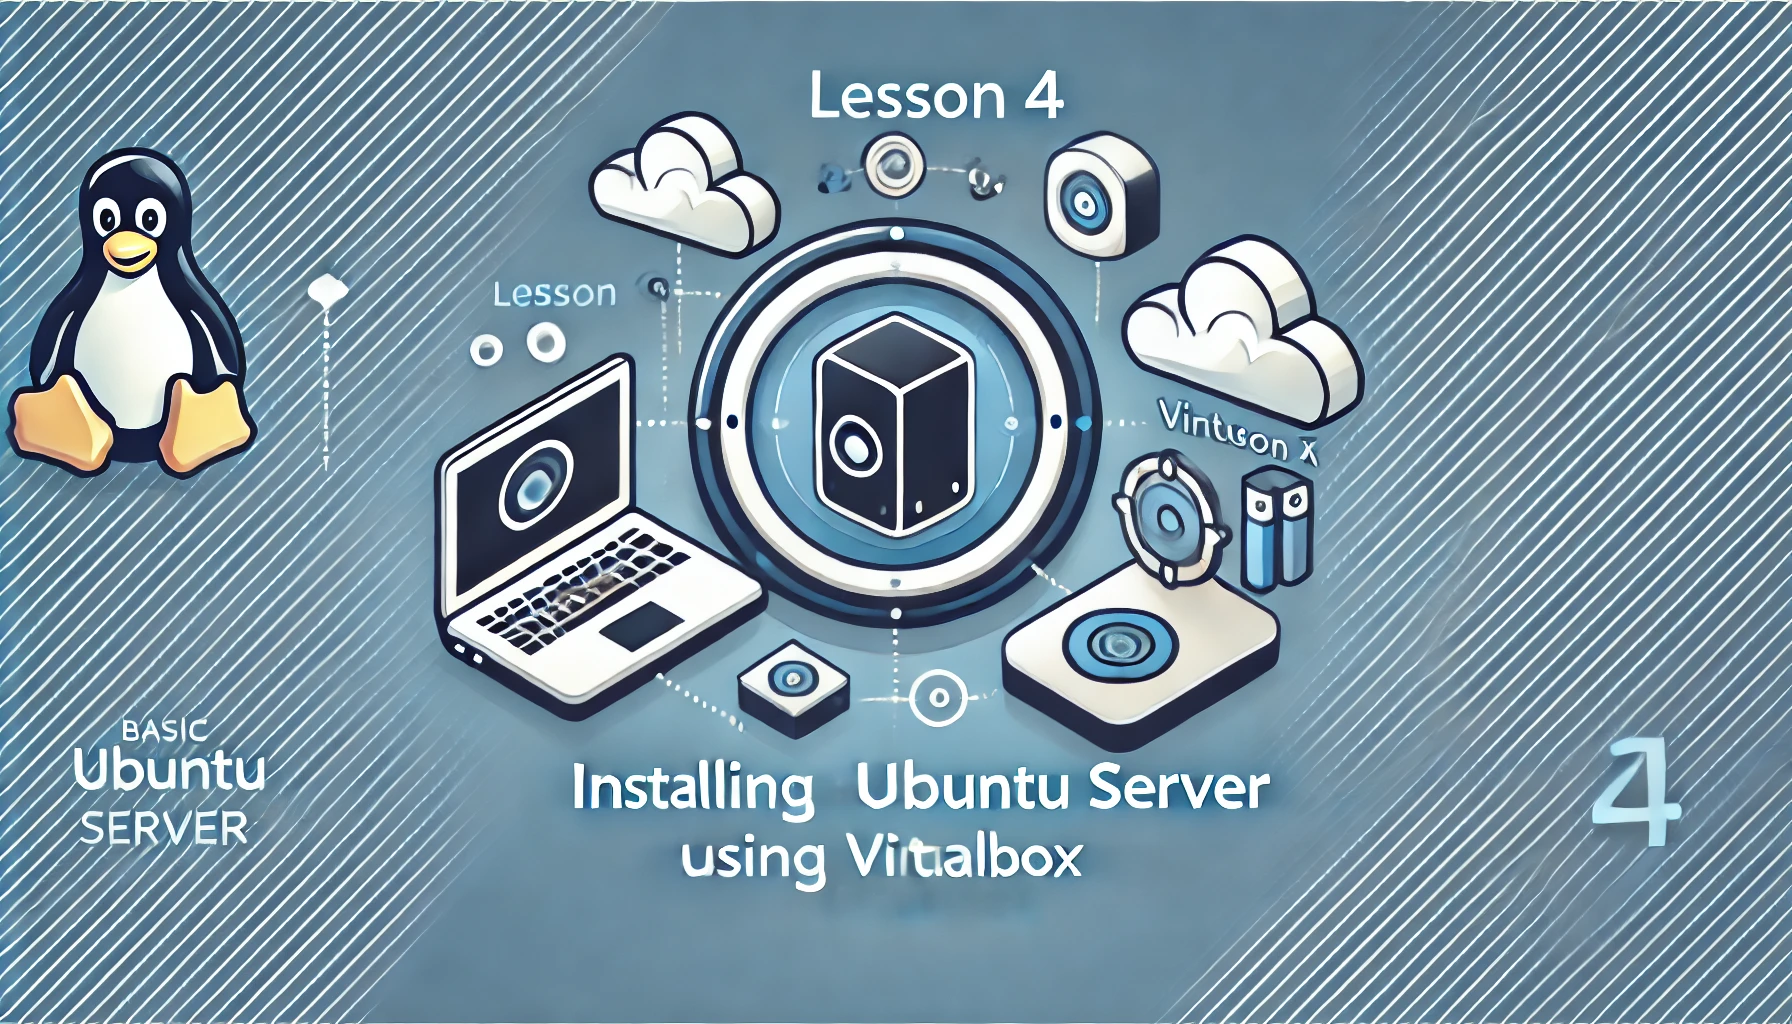 Lesson 4 - Installing Ubuntu Server on VirtualBox